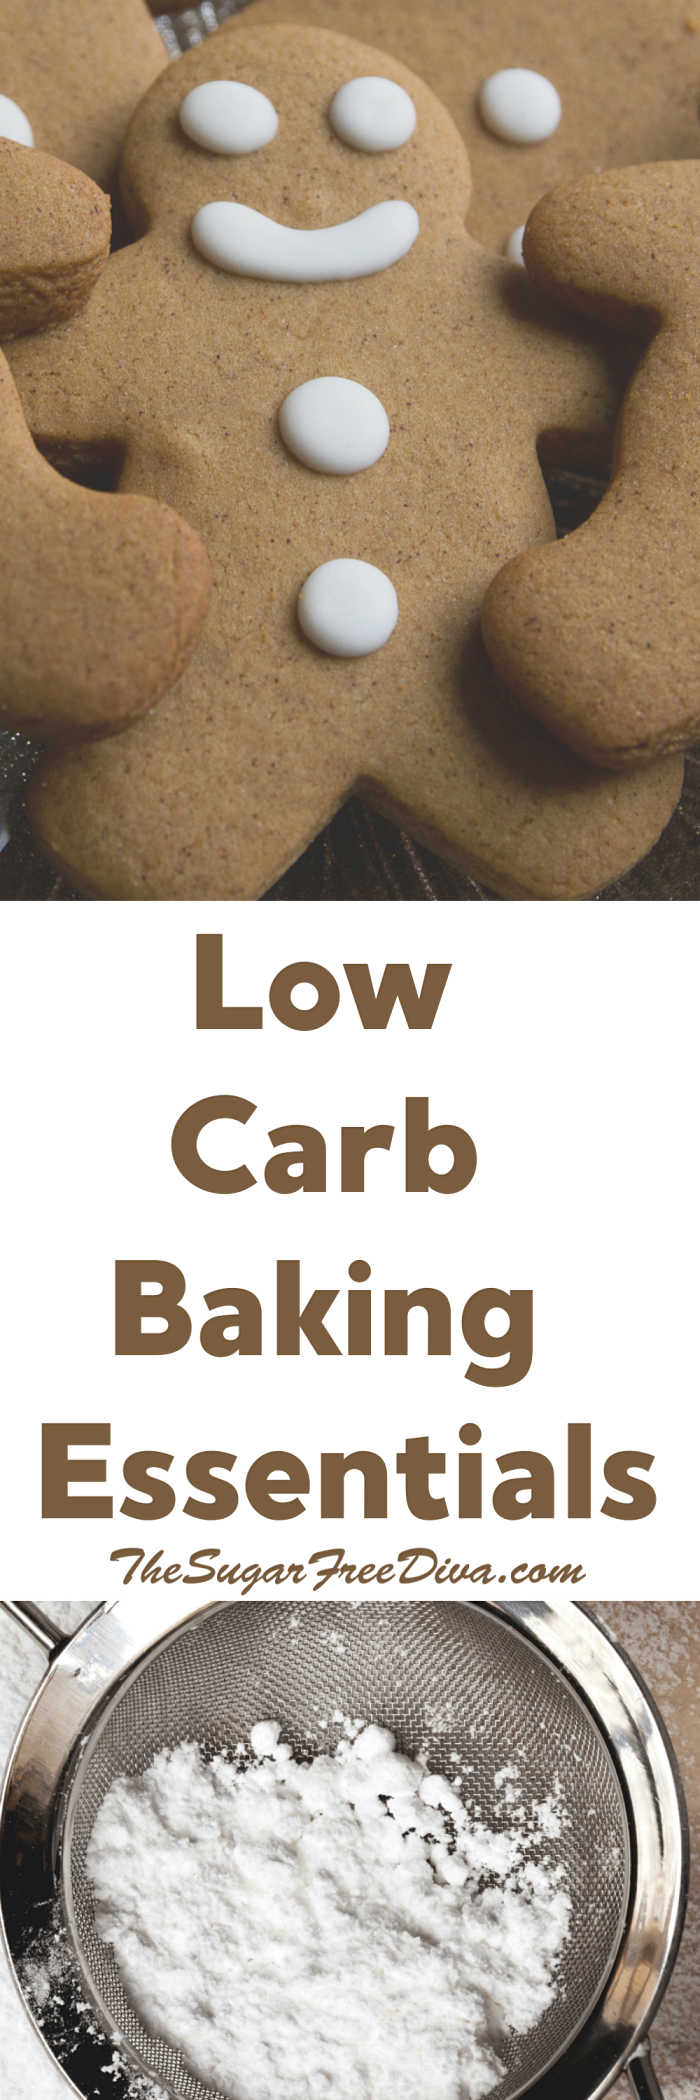 Low Carb Baking Essentials